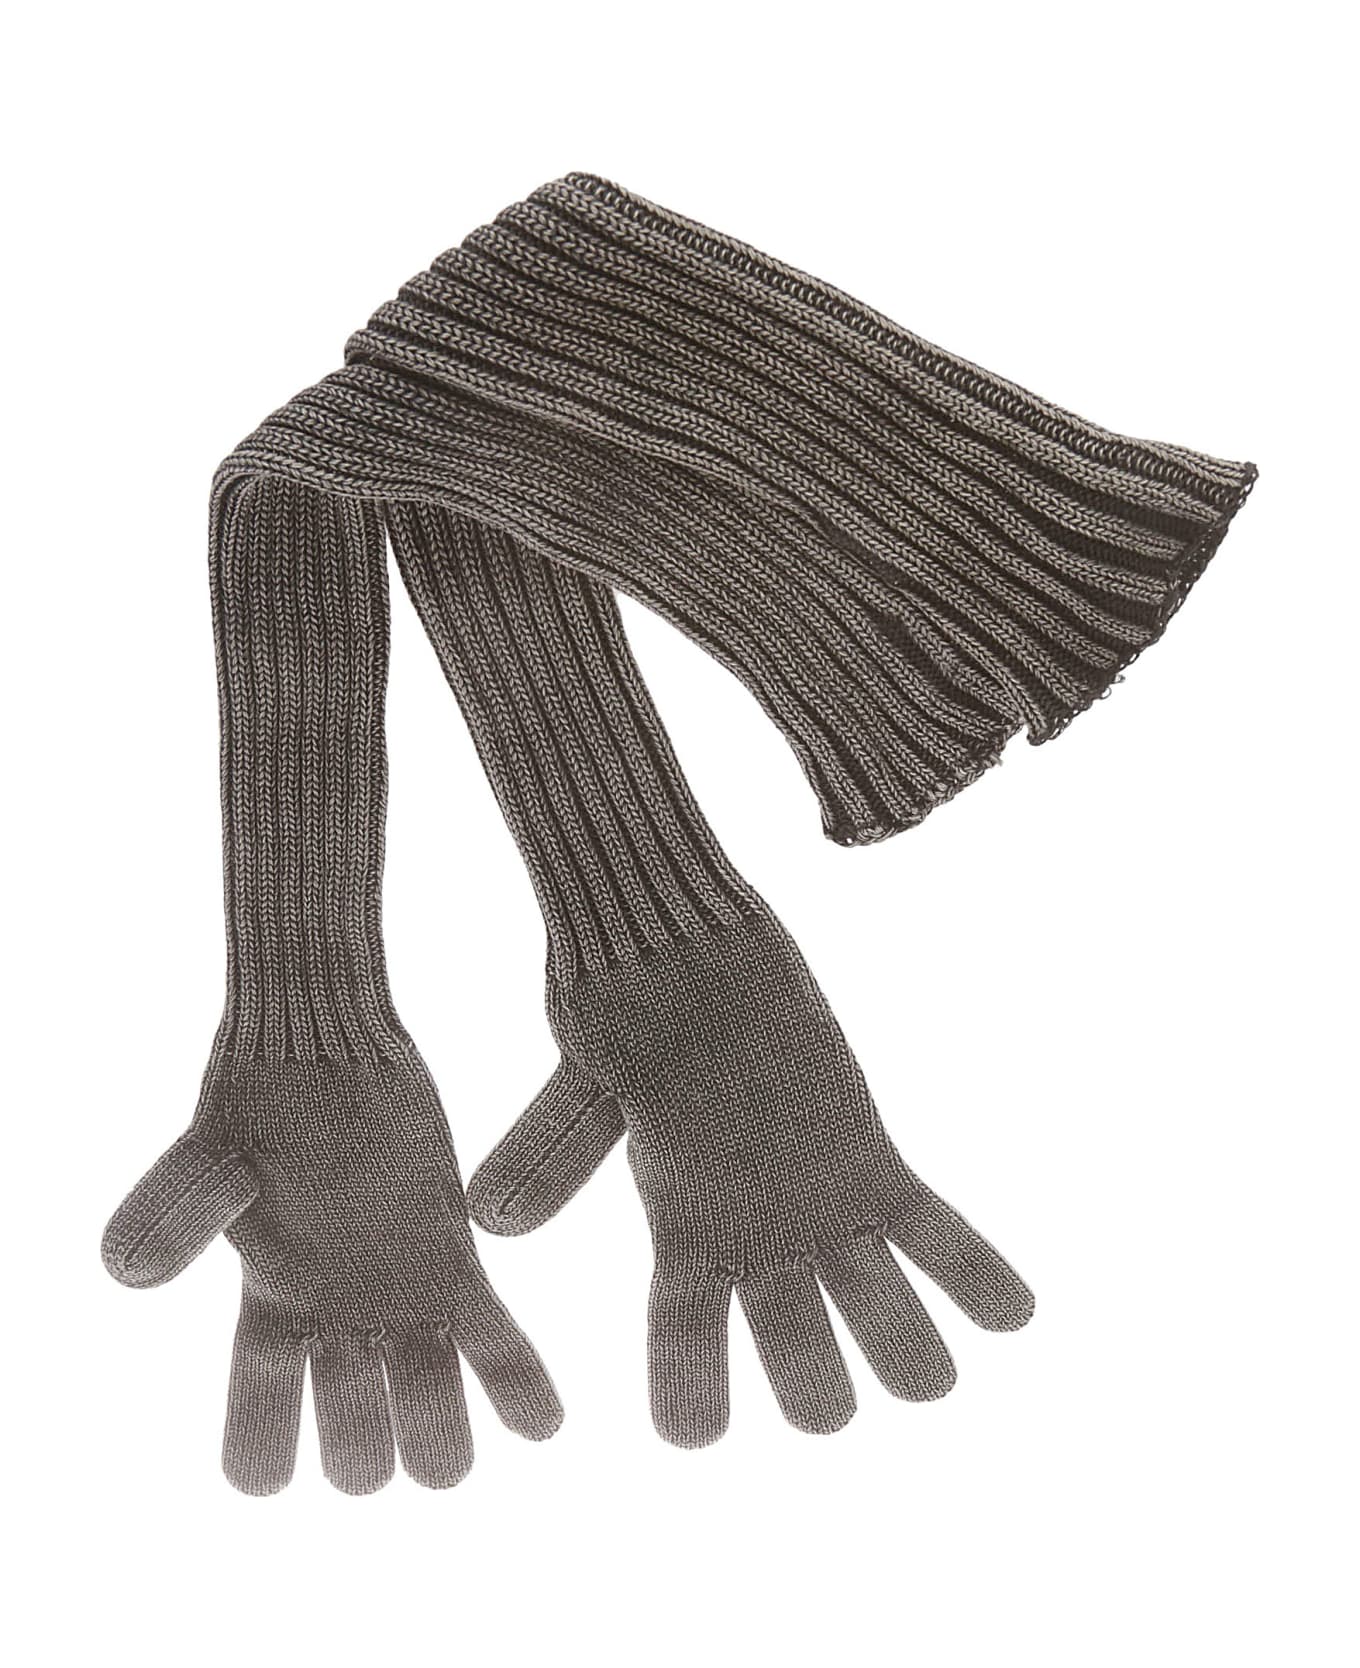 Vaquera Unisex Opera Gloves Knit - 1